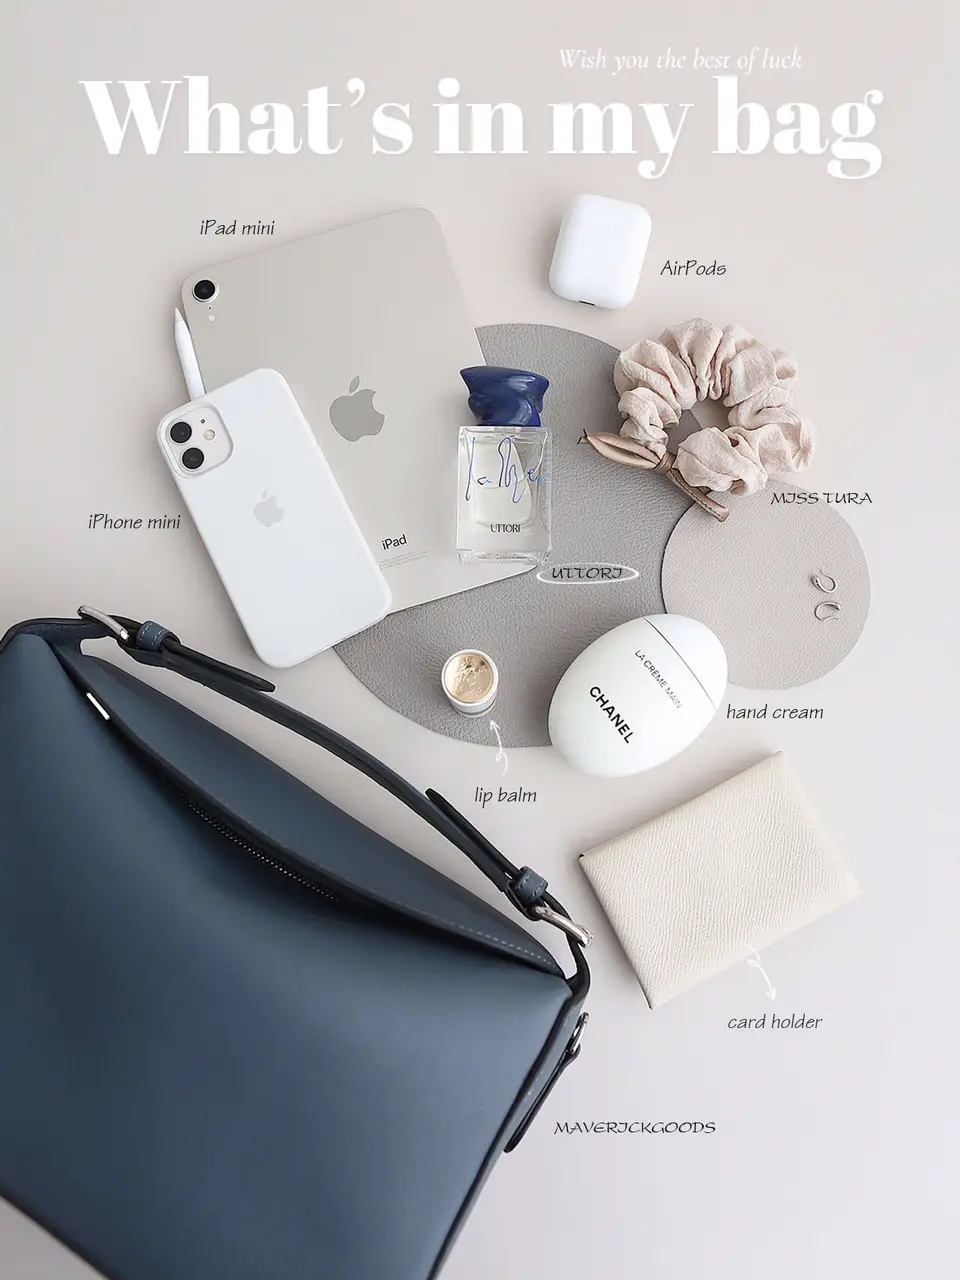 Designer commuter flap bag丨Lite items